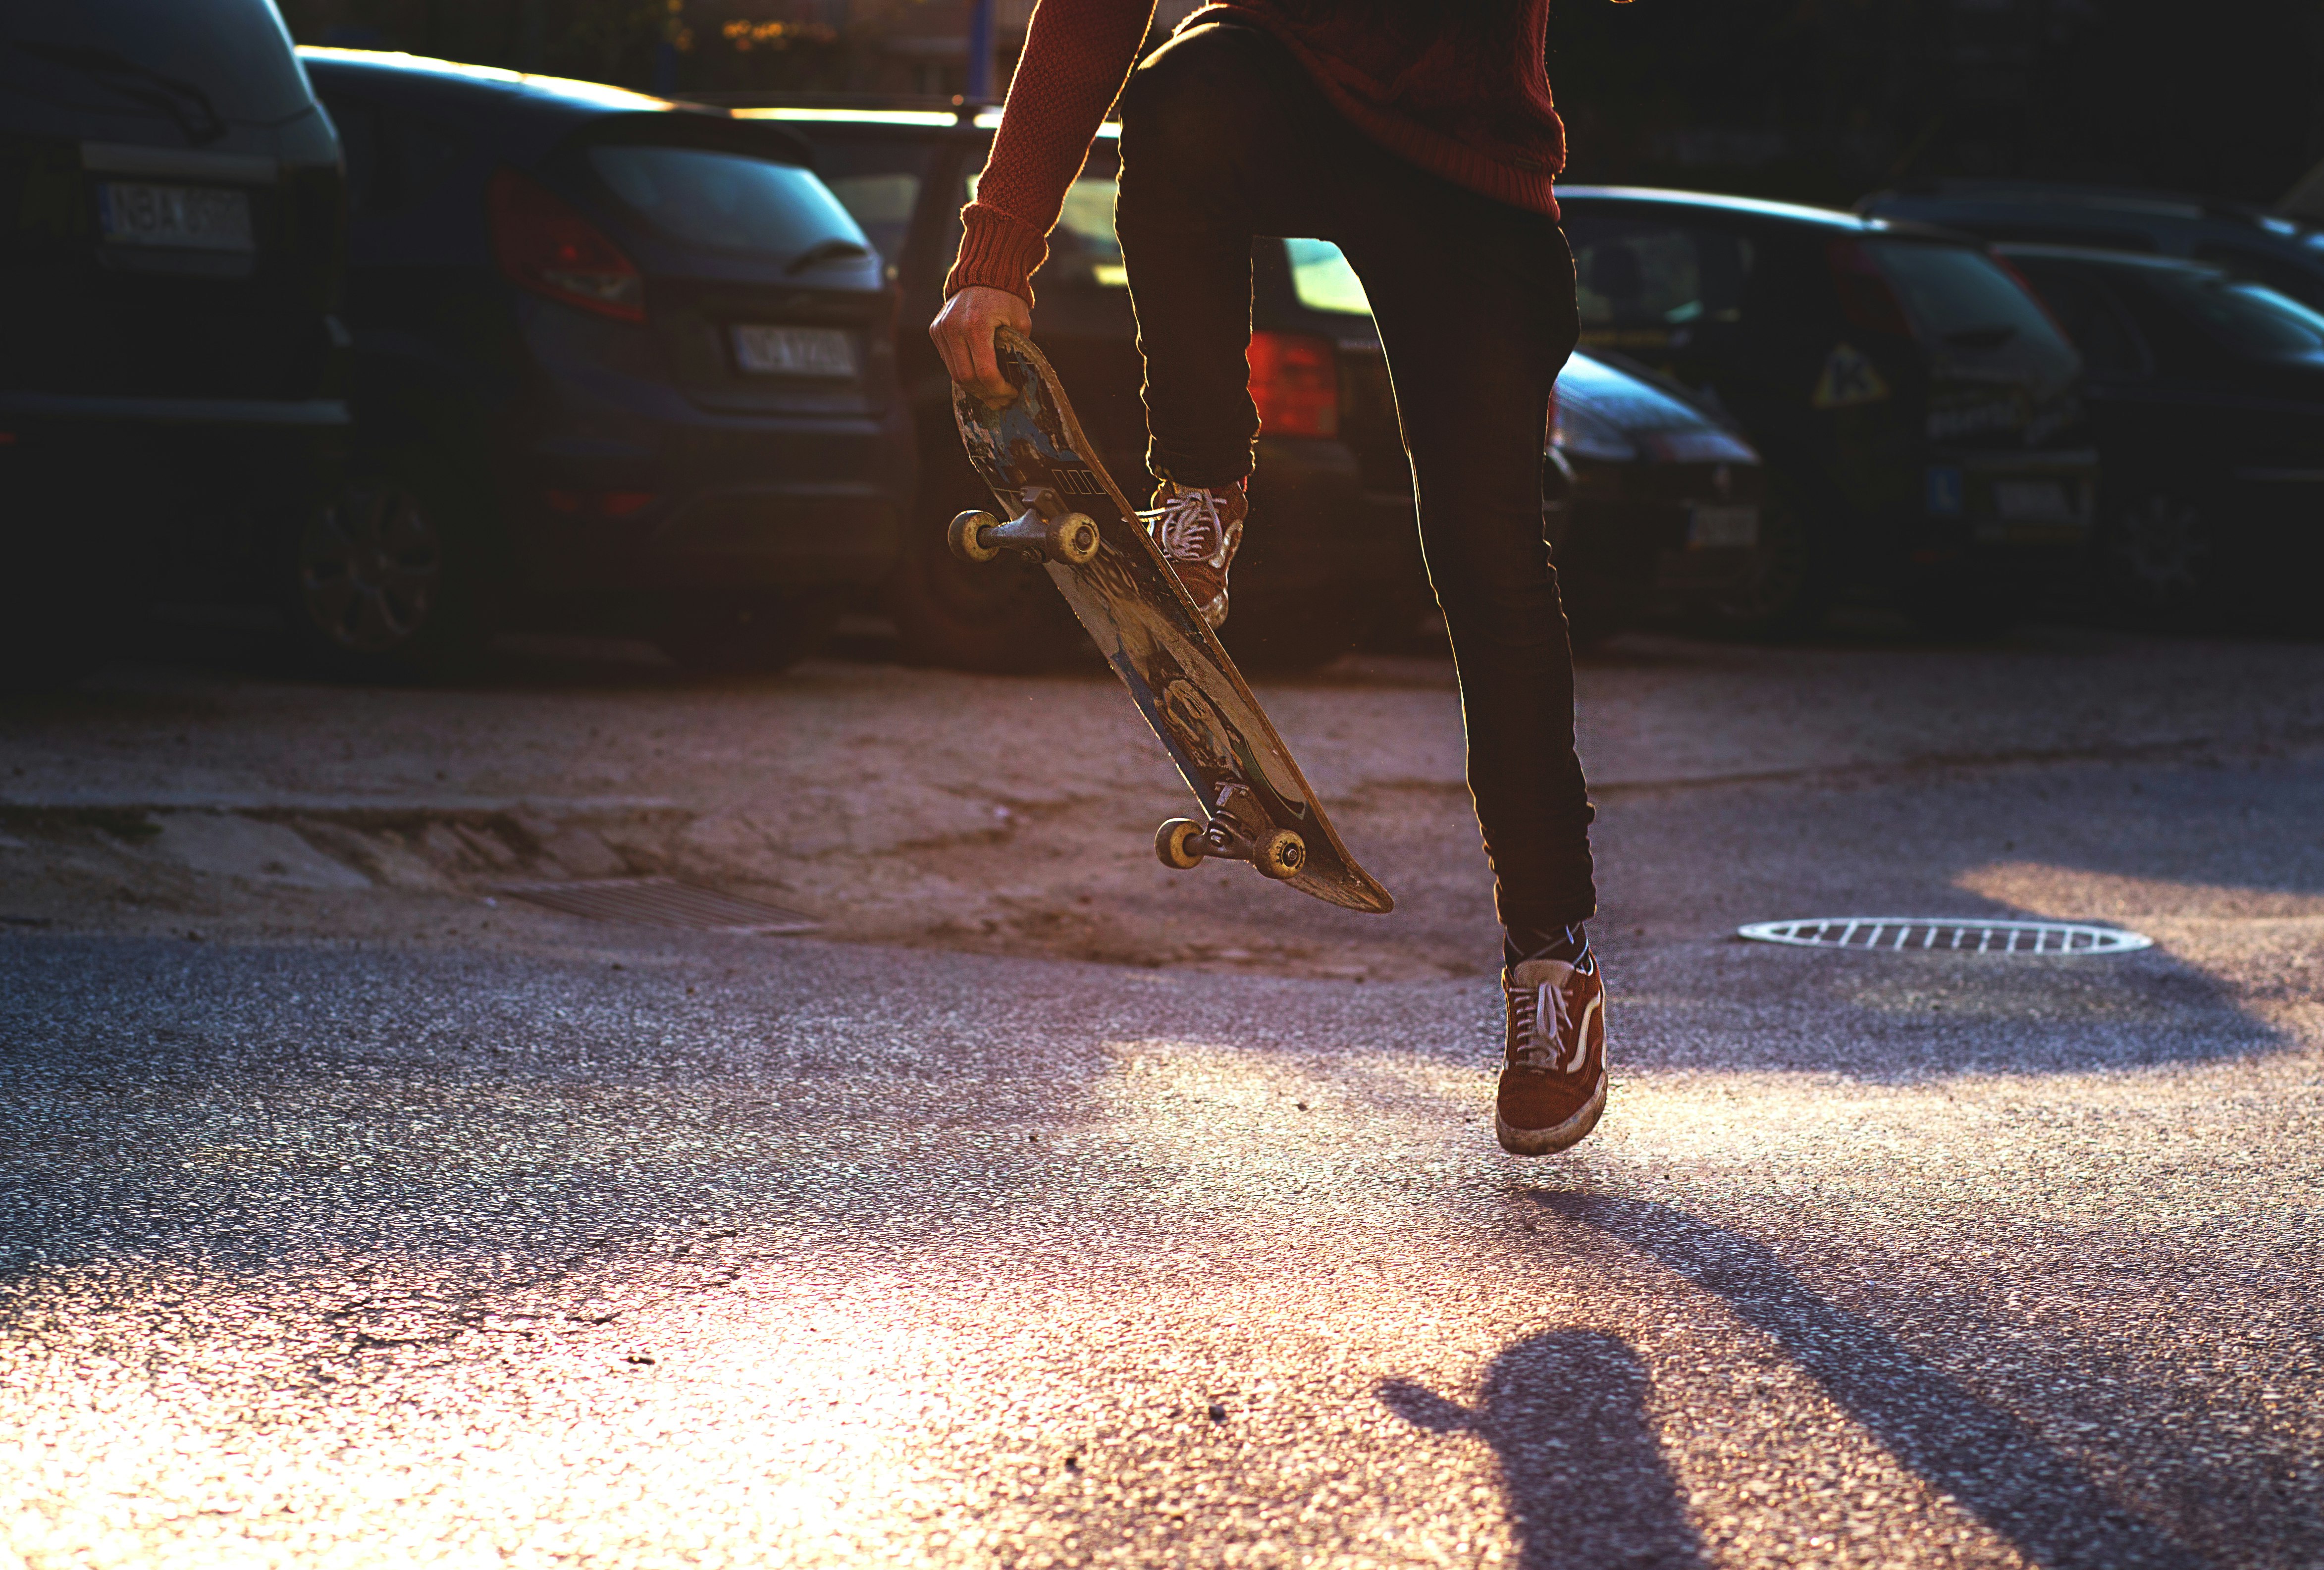 person doing tricks on skateboards